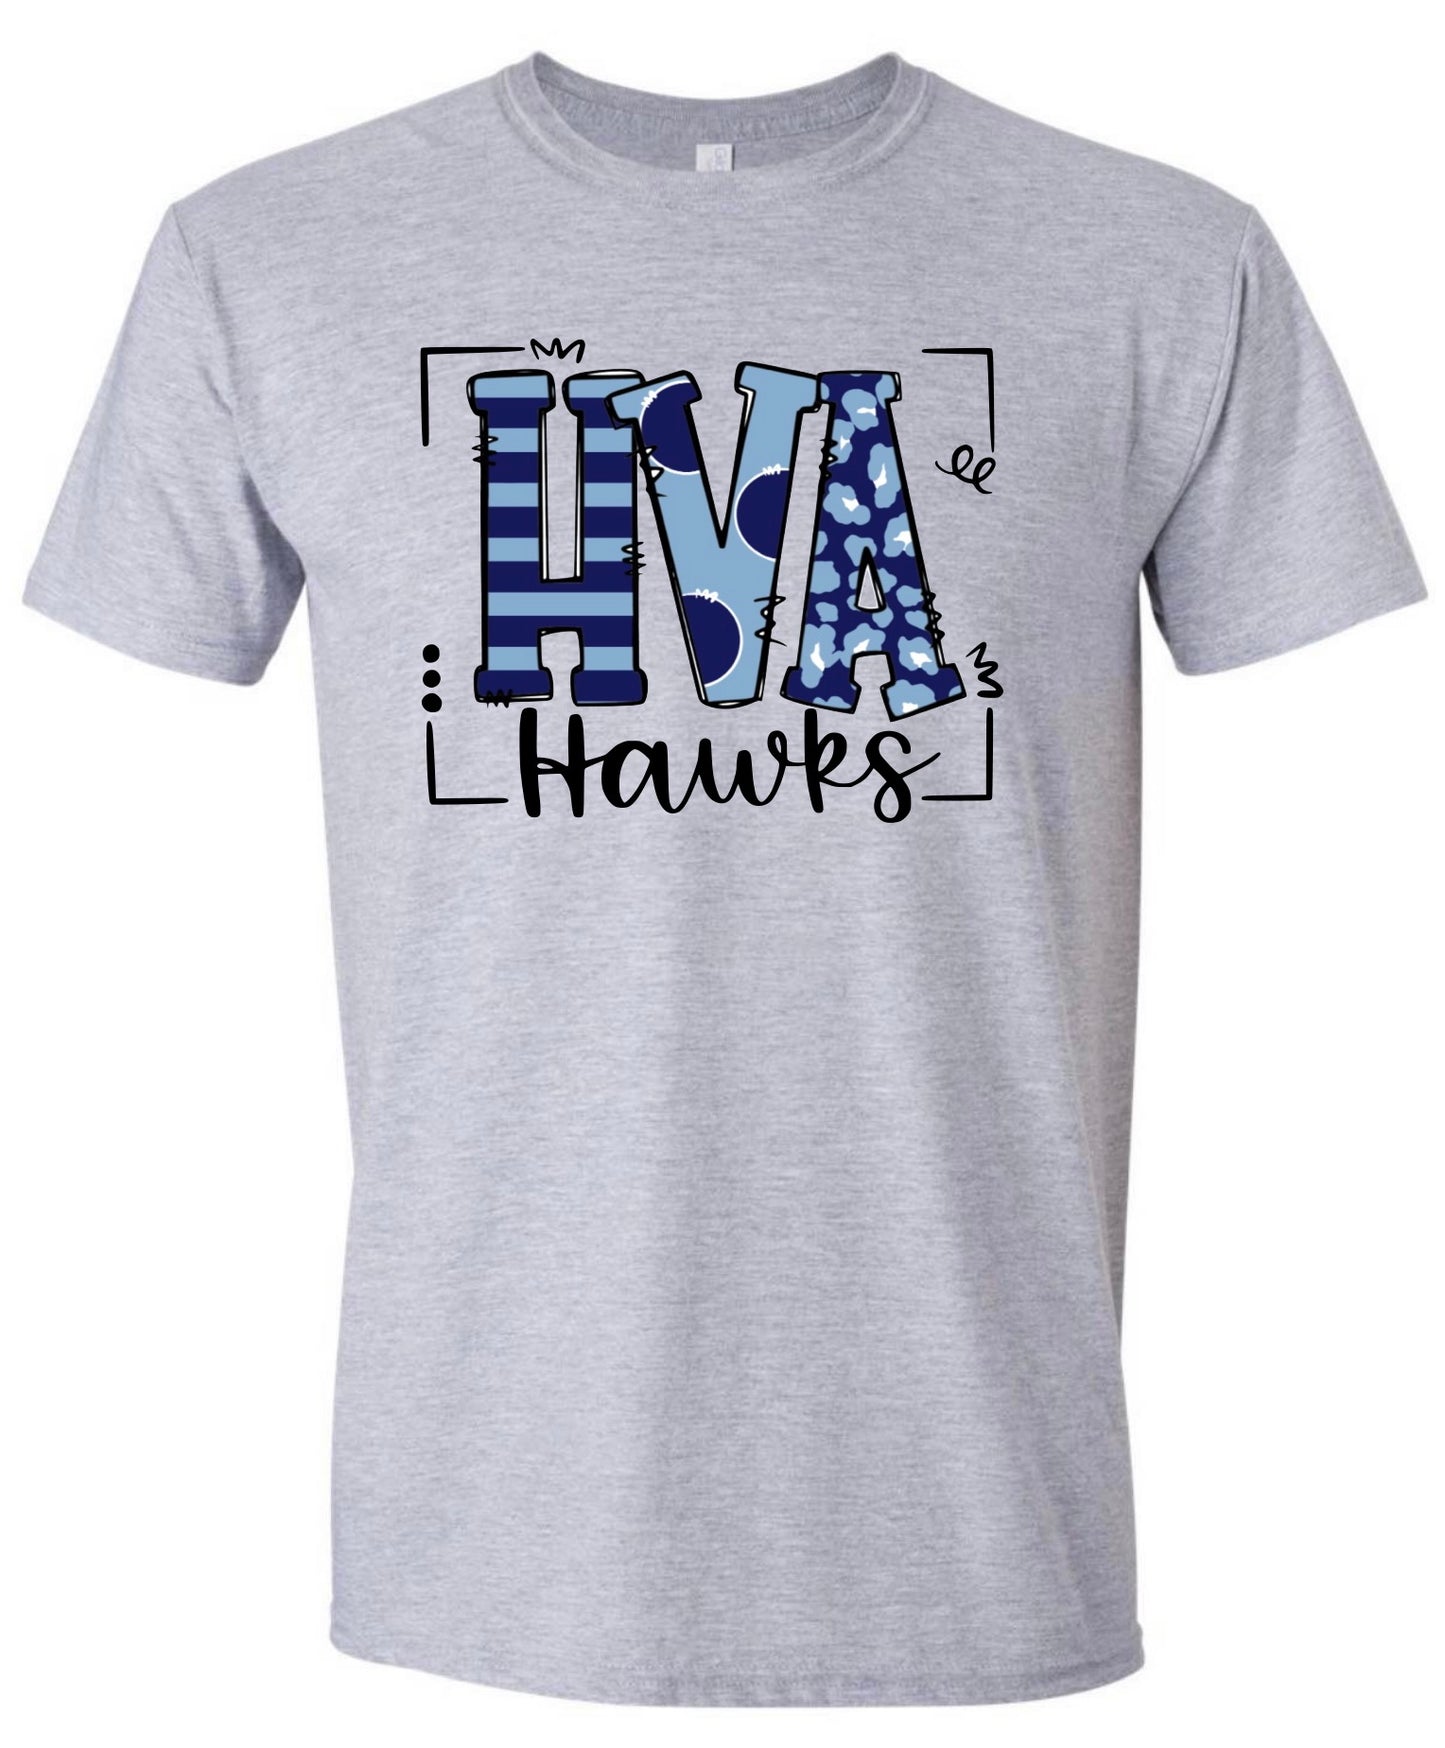 HVA Hawks Doodle Tshirt